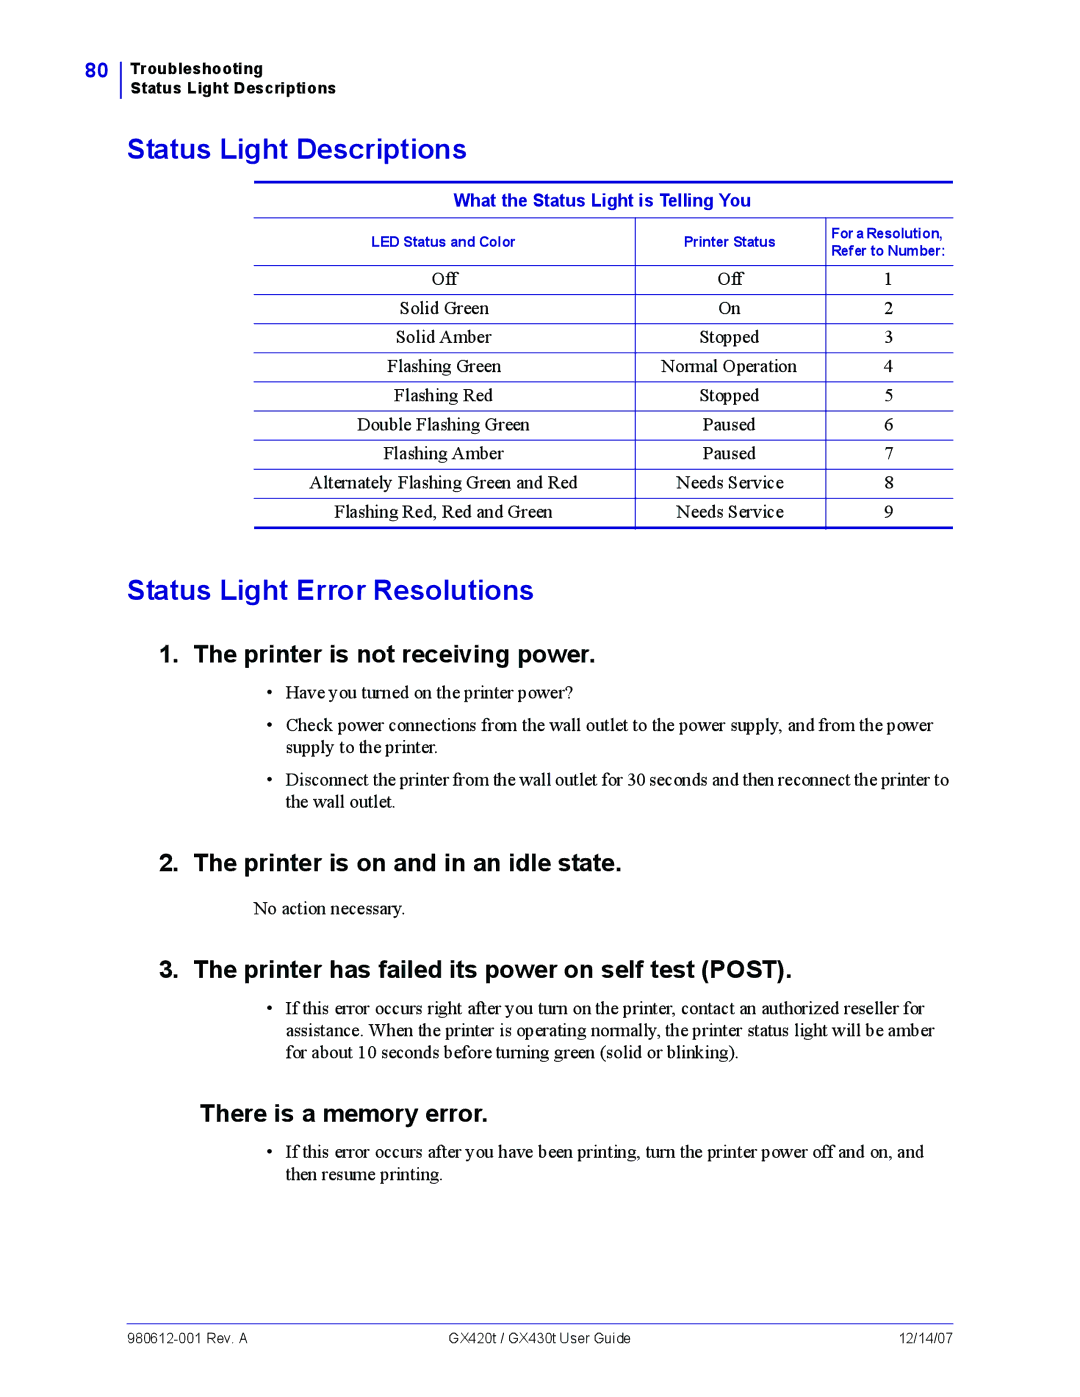 Zebra Technologies GX430t, GX420t manual Status Light Descriptions, Status Light Error Resolutions 